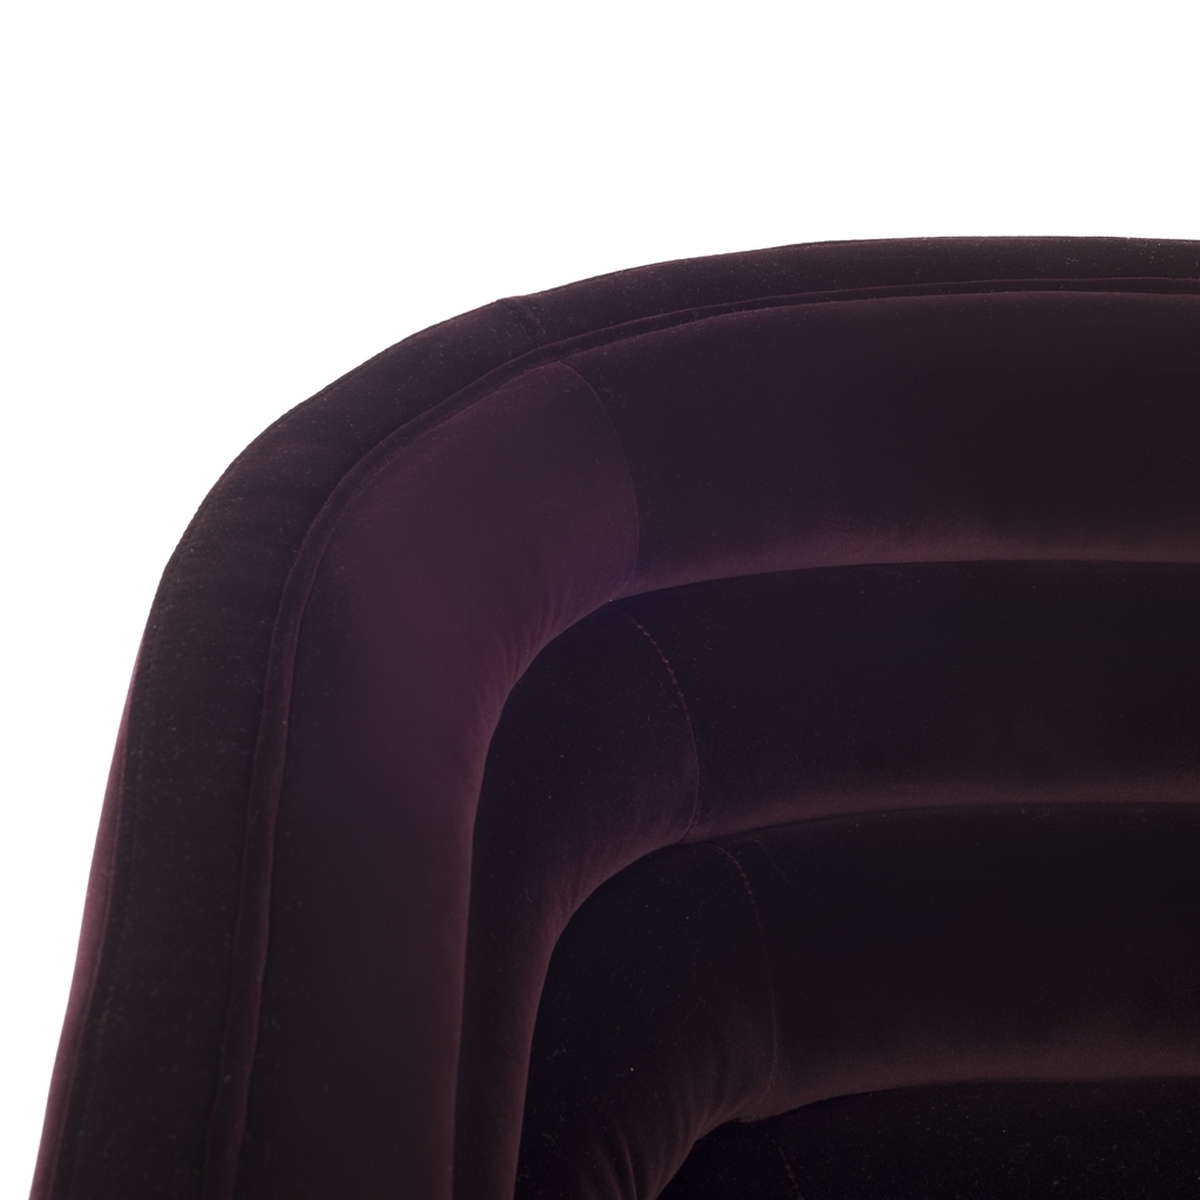 Arvilla Swivel Club Chair - Giotto Cabernet - Arlo Home - Image 7